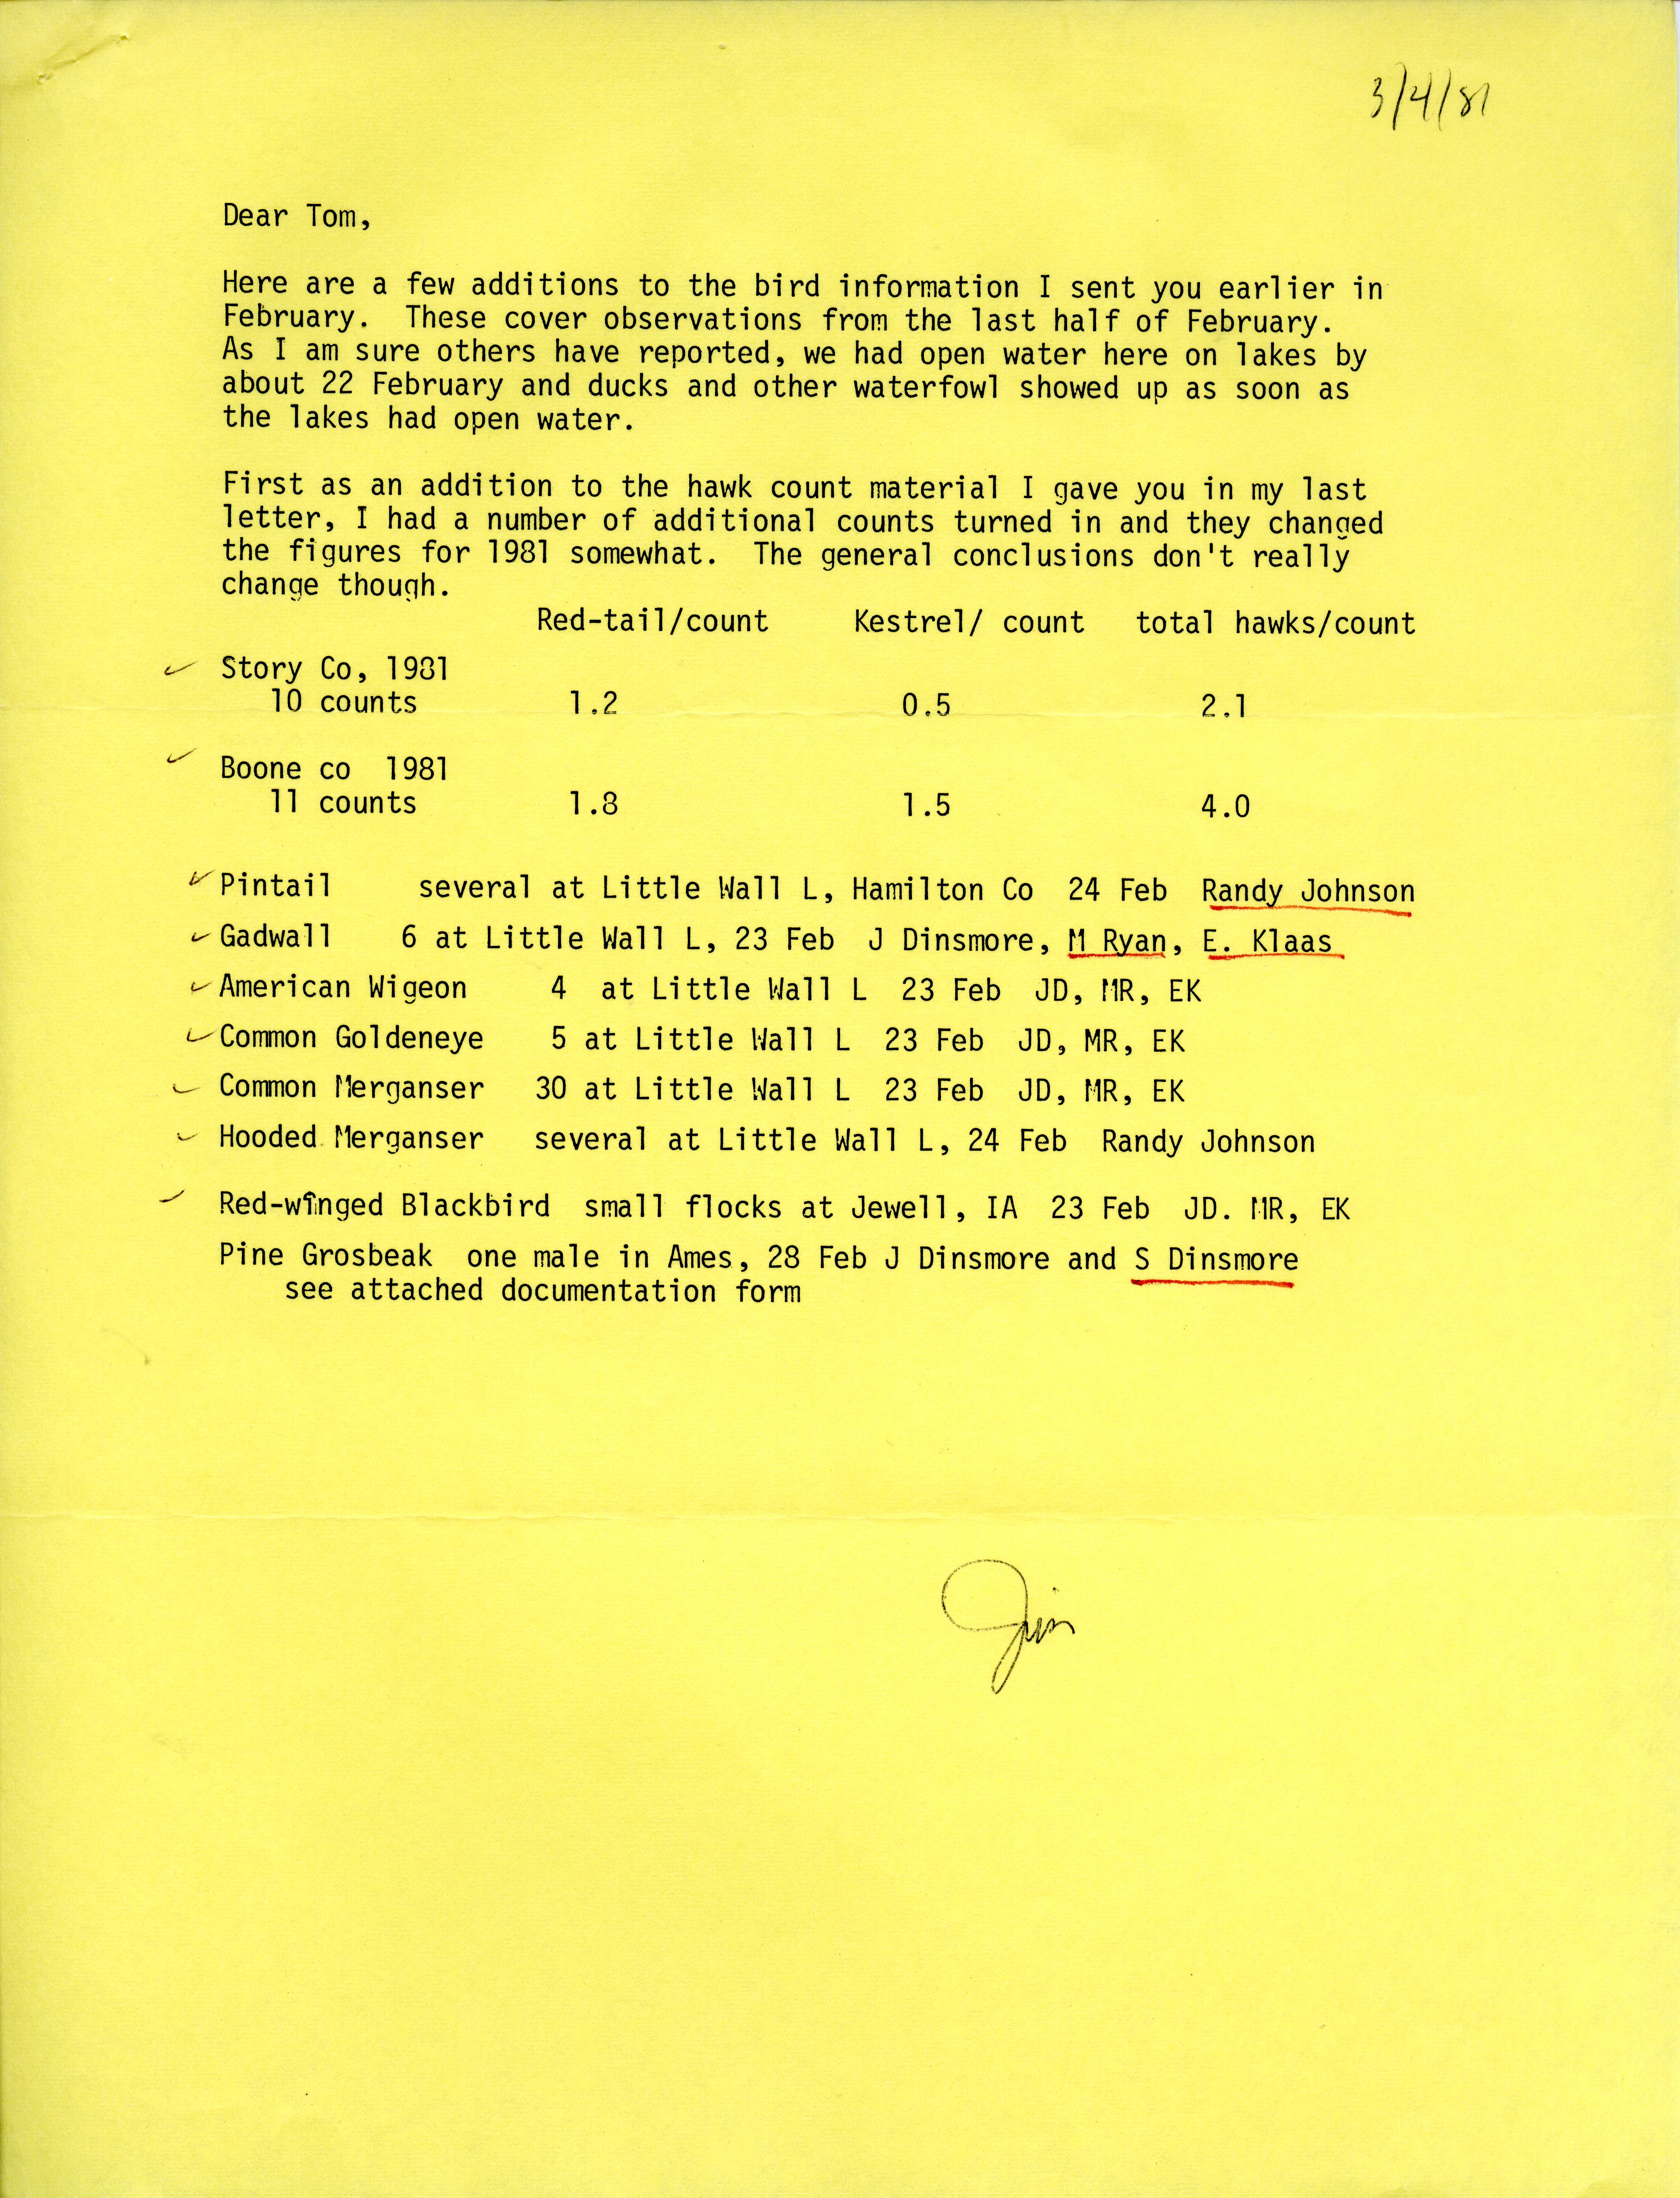 Jim Dinsmore letter to Thomas Kent regarding additional bird information, March 4, 1981